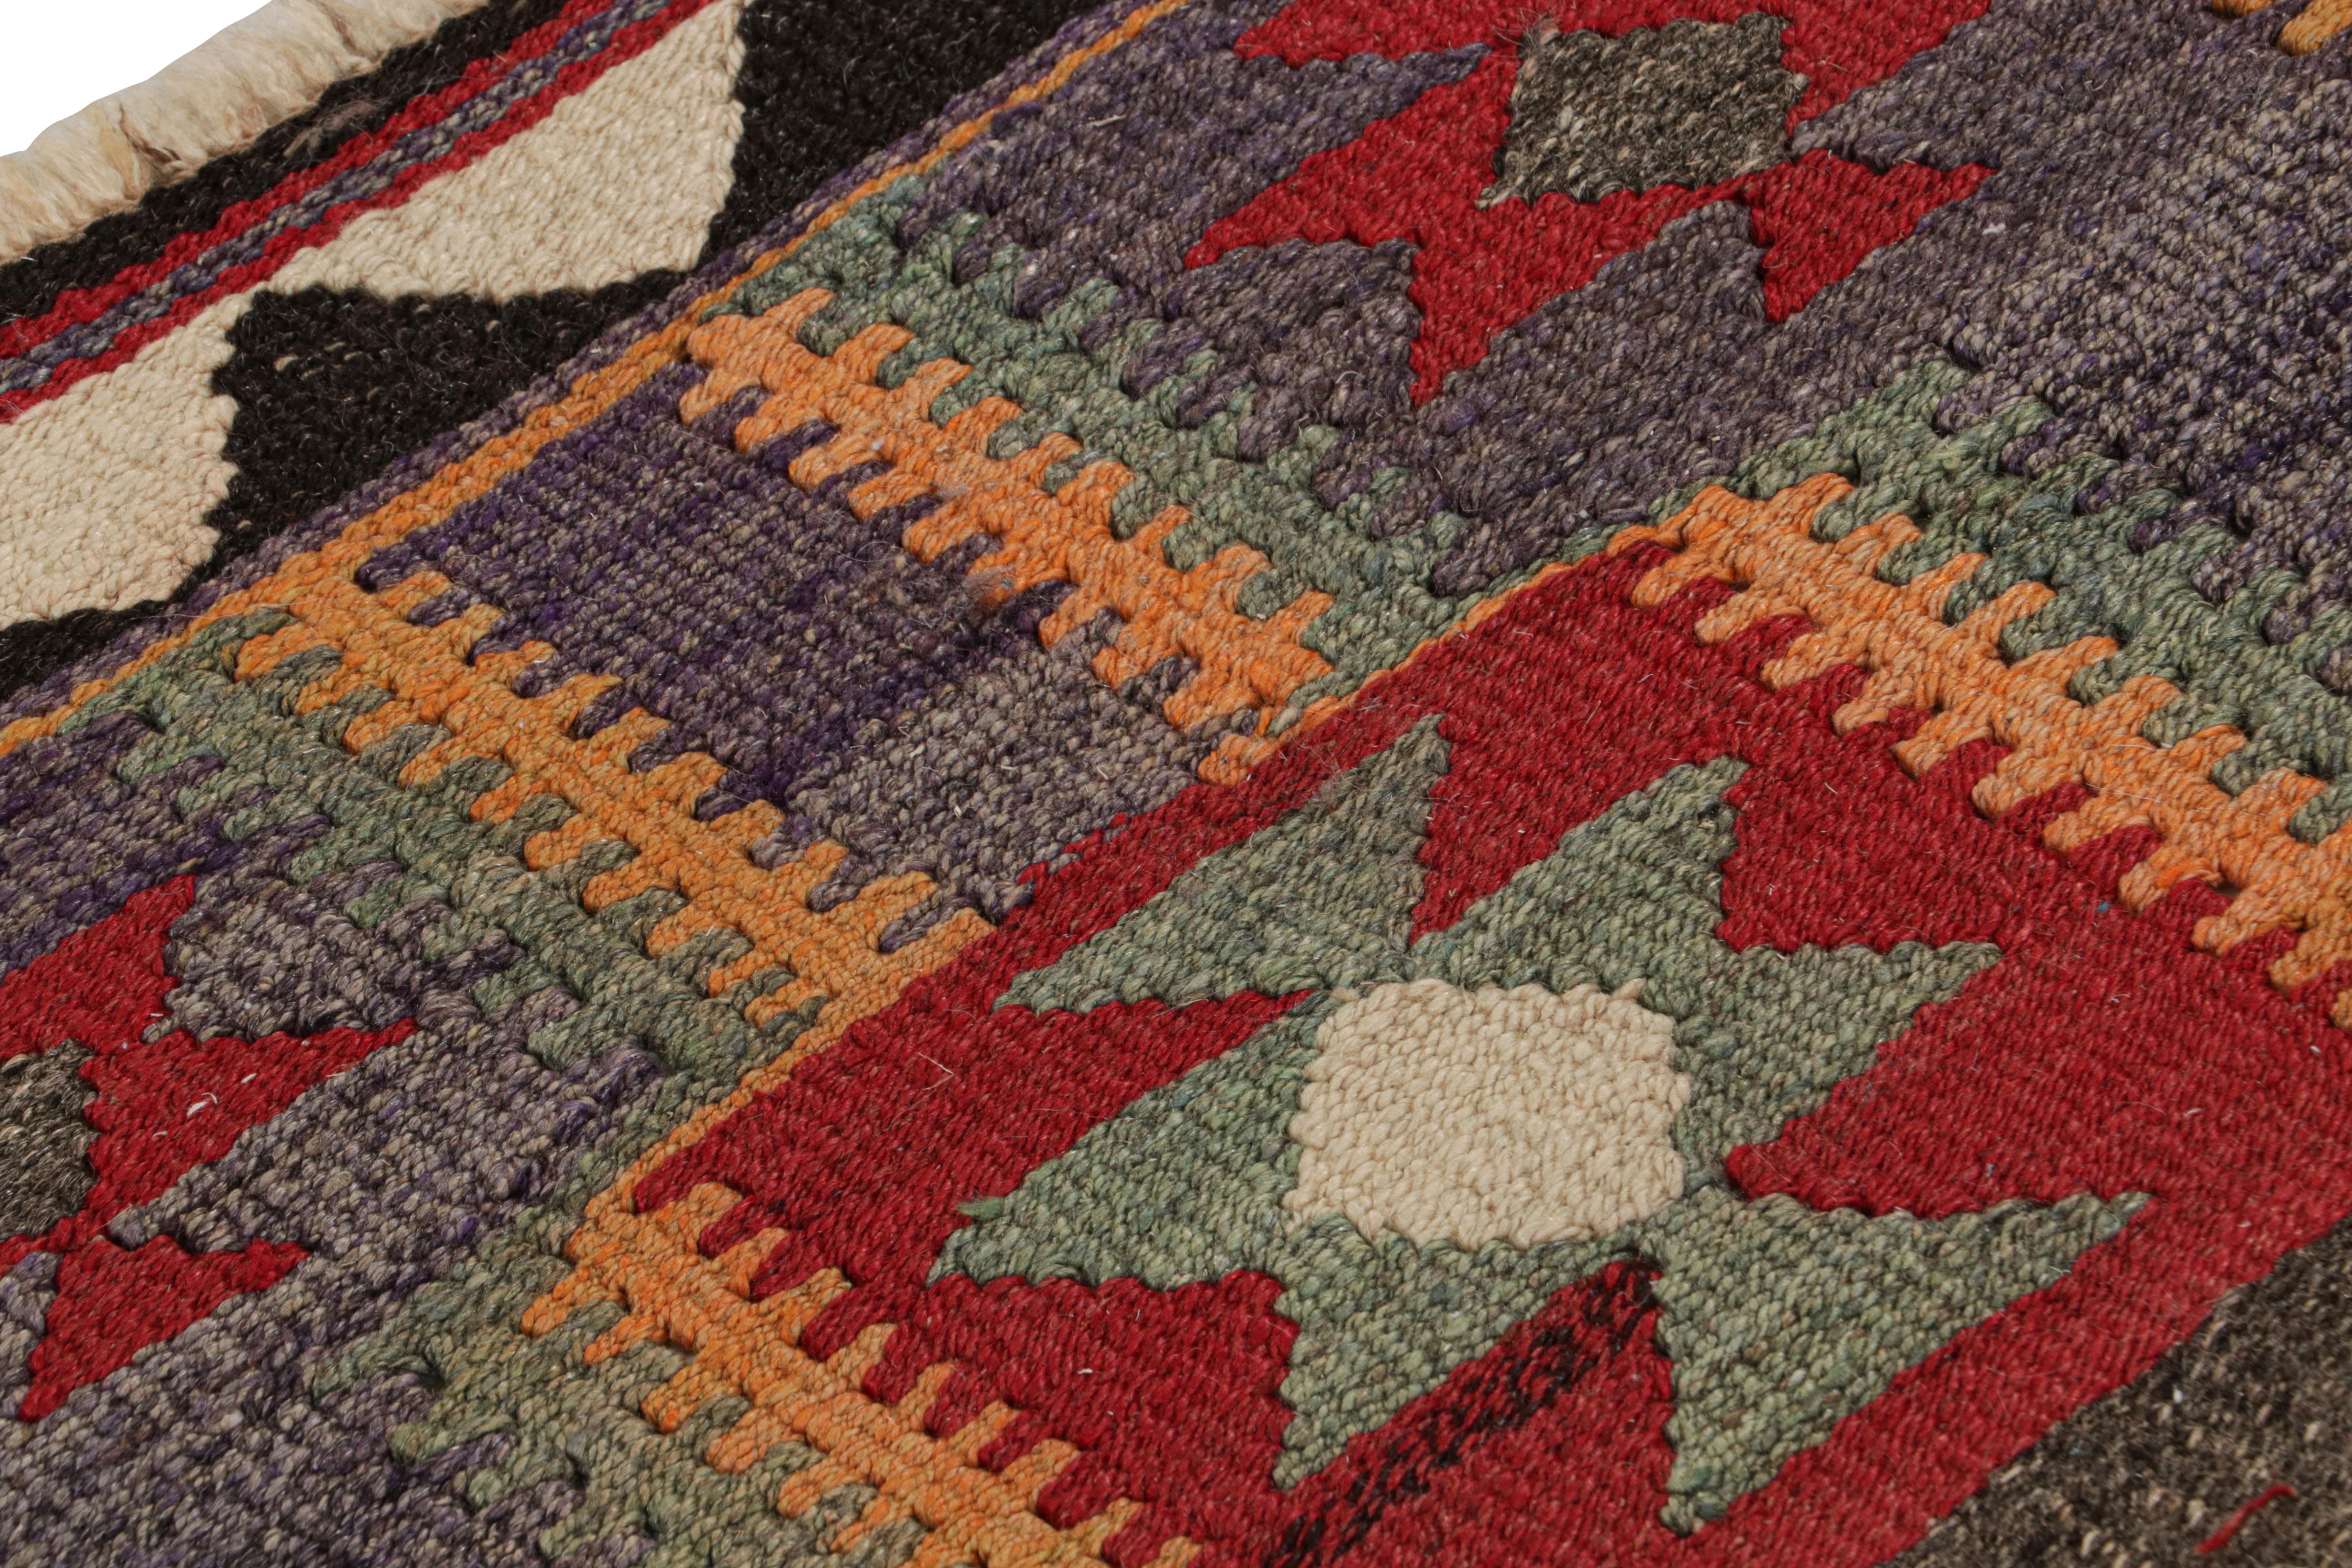 Tribal 1950s Vintage Kilim rug in Red Blue, Multicolor Geometric Pattern by Rug & Kilim For Sale